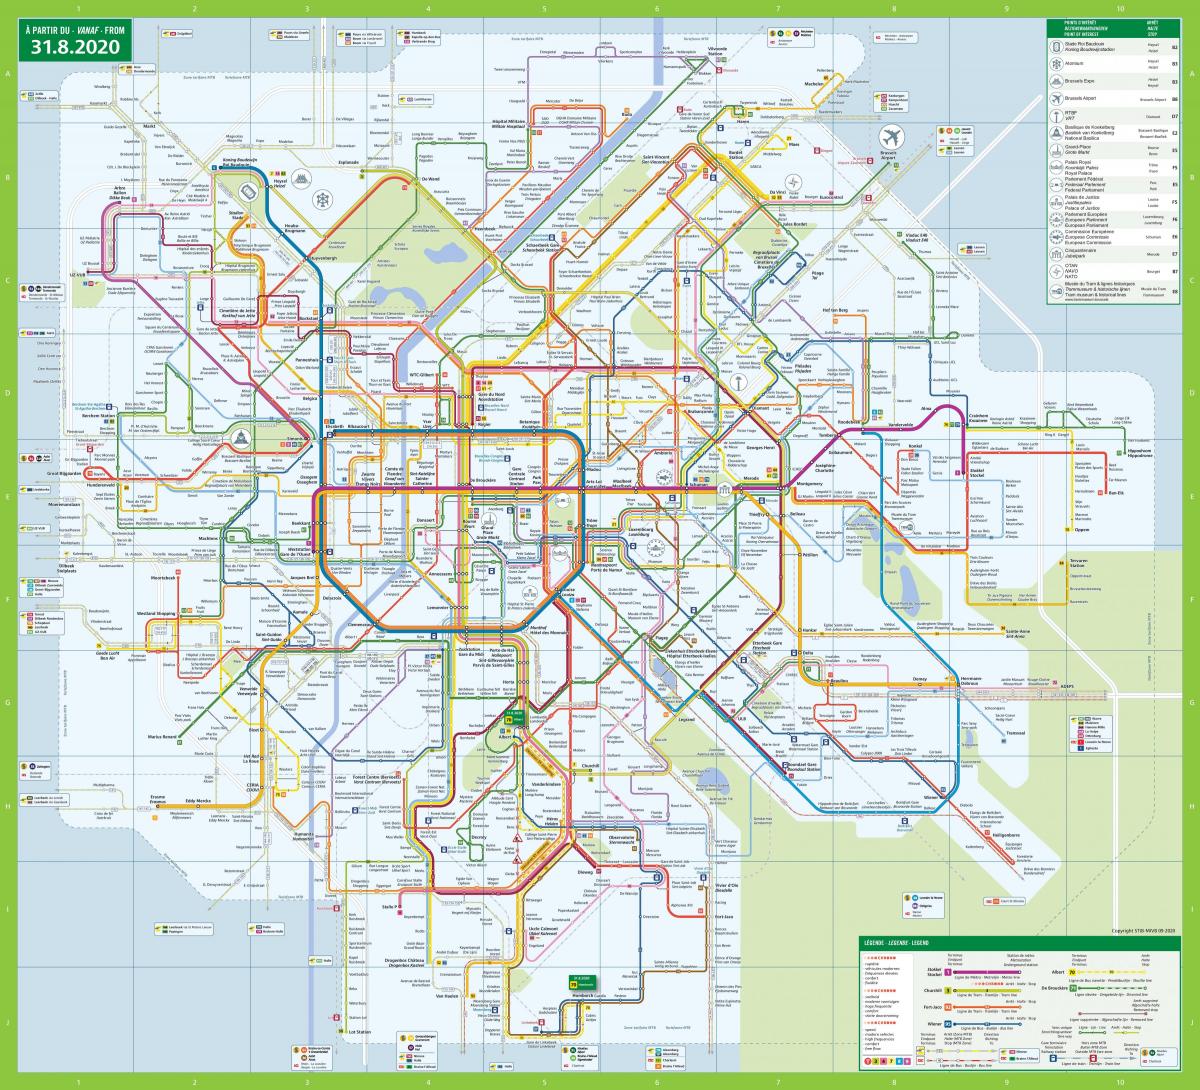 Brussels transit map